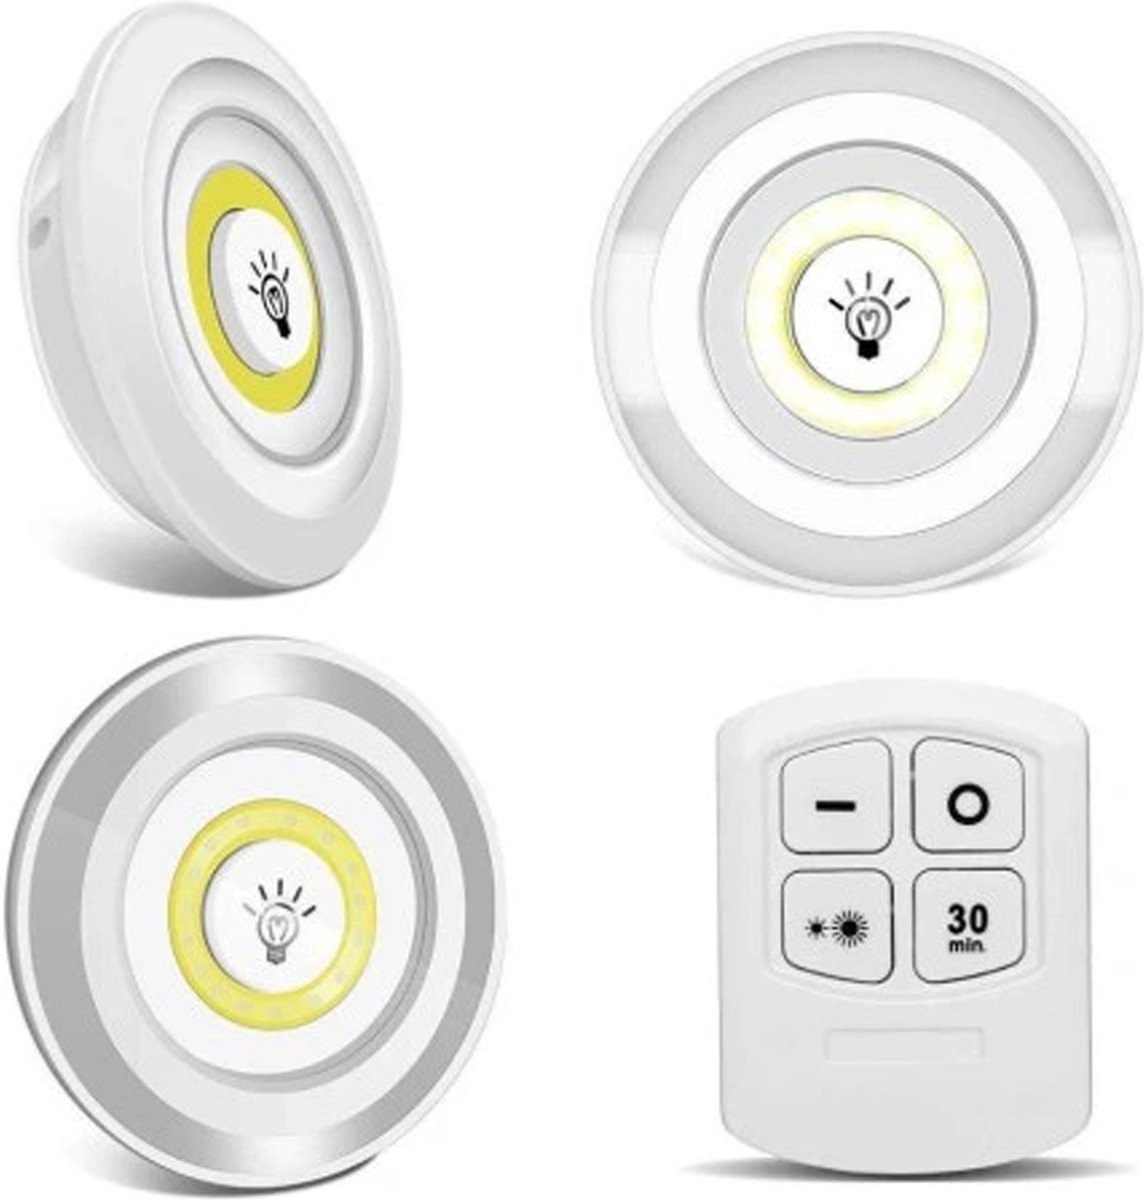 LED Lampen - 3 Stuks - Druklampen - Dimbaar - Afstandsbediening - Zelfklevend - LED Licht - Draadloos - Rheme